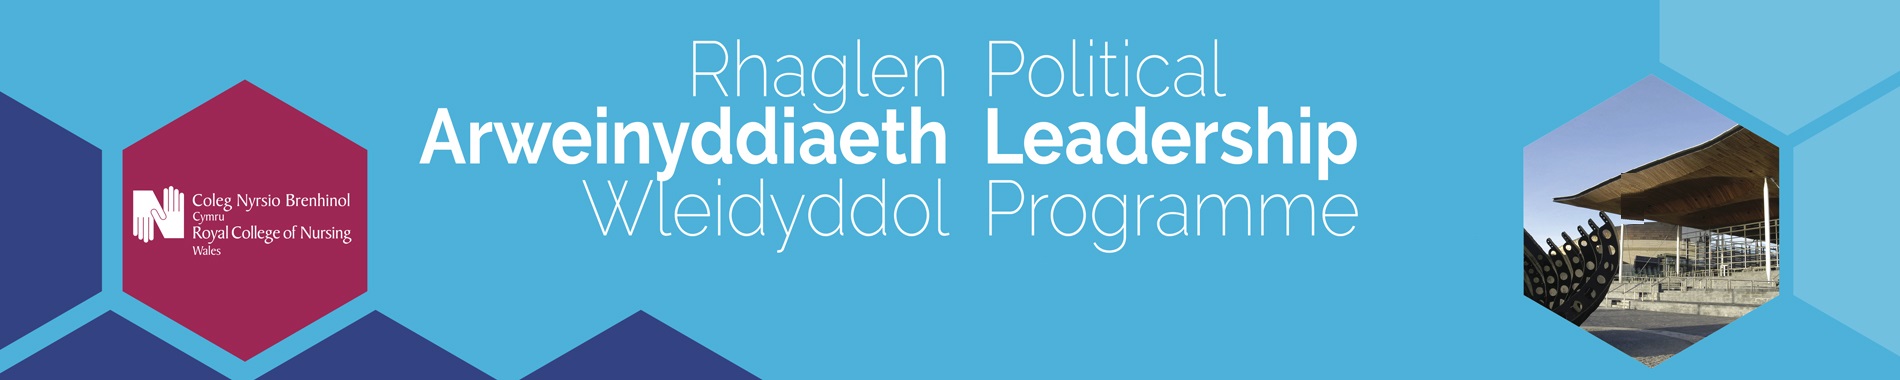 RCN Wales Political Leadership Programme banner